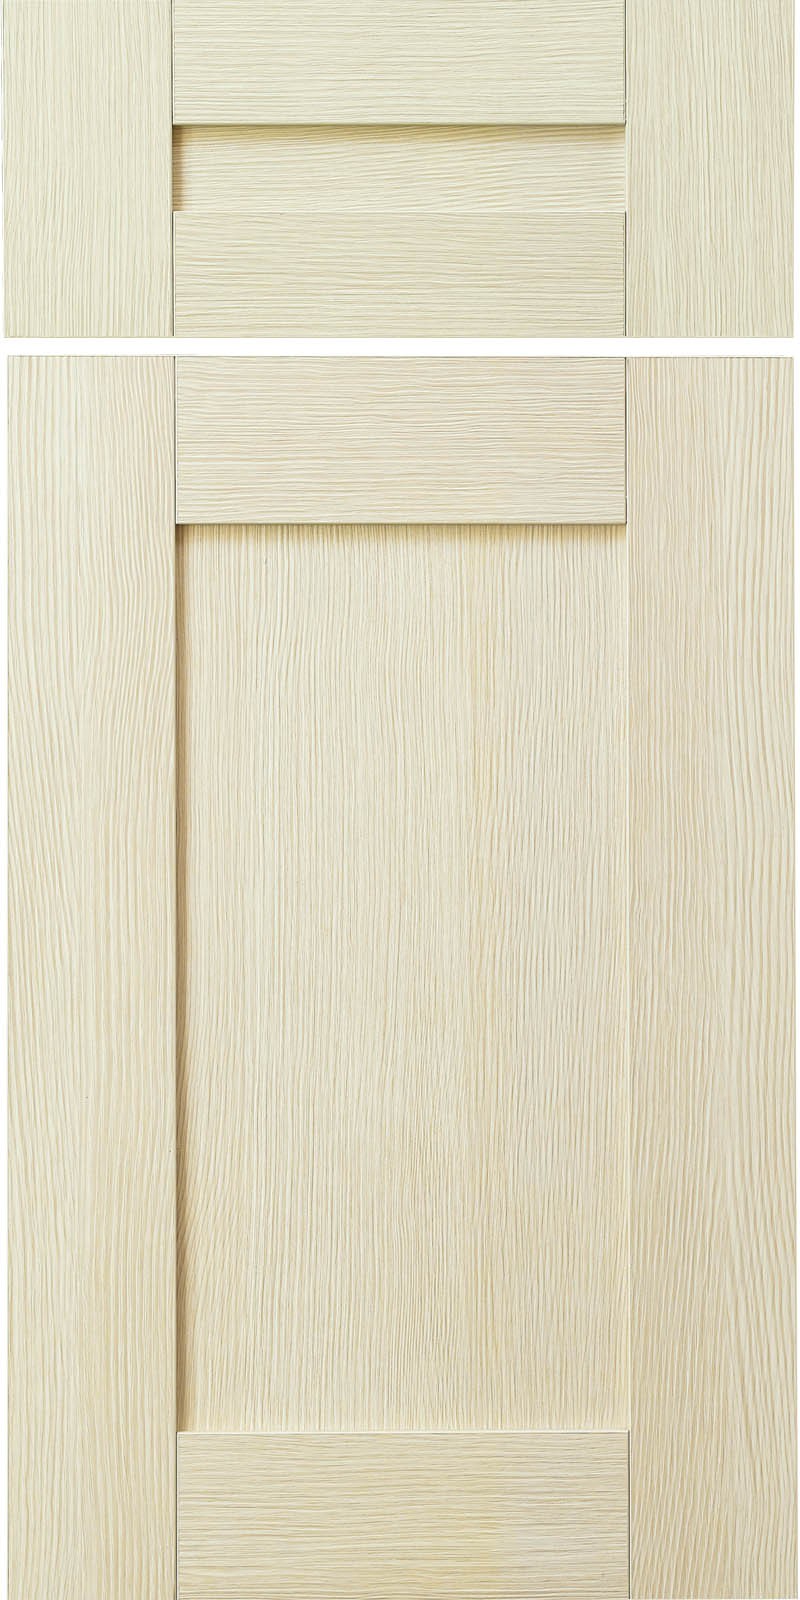 Strata cabinet doors in Swiss Almond